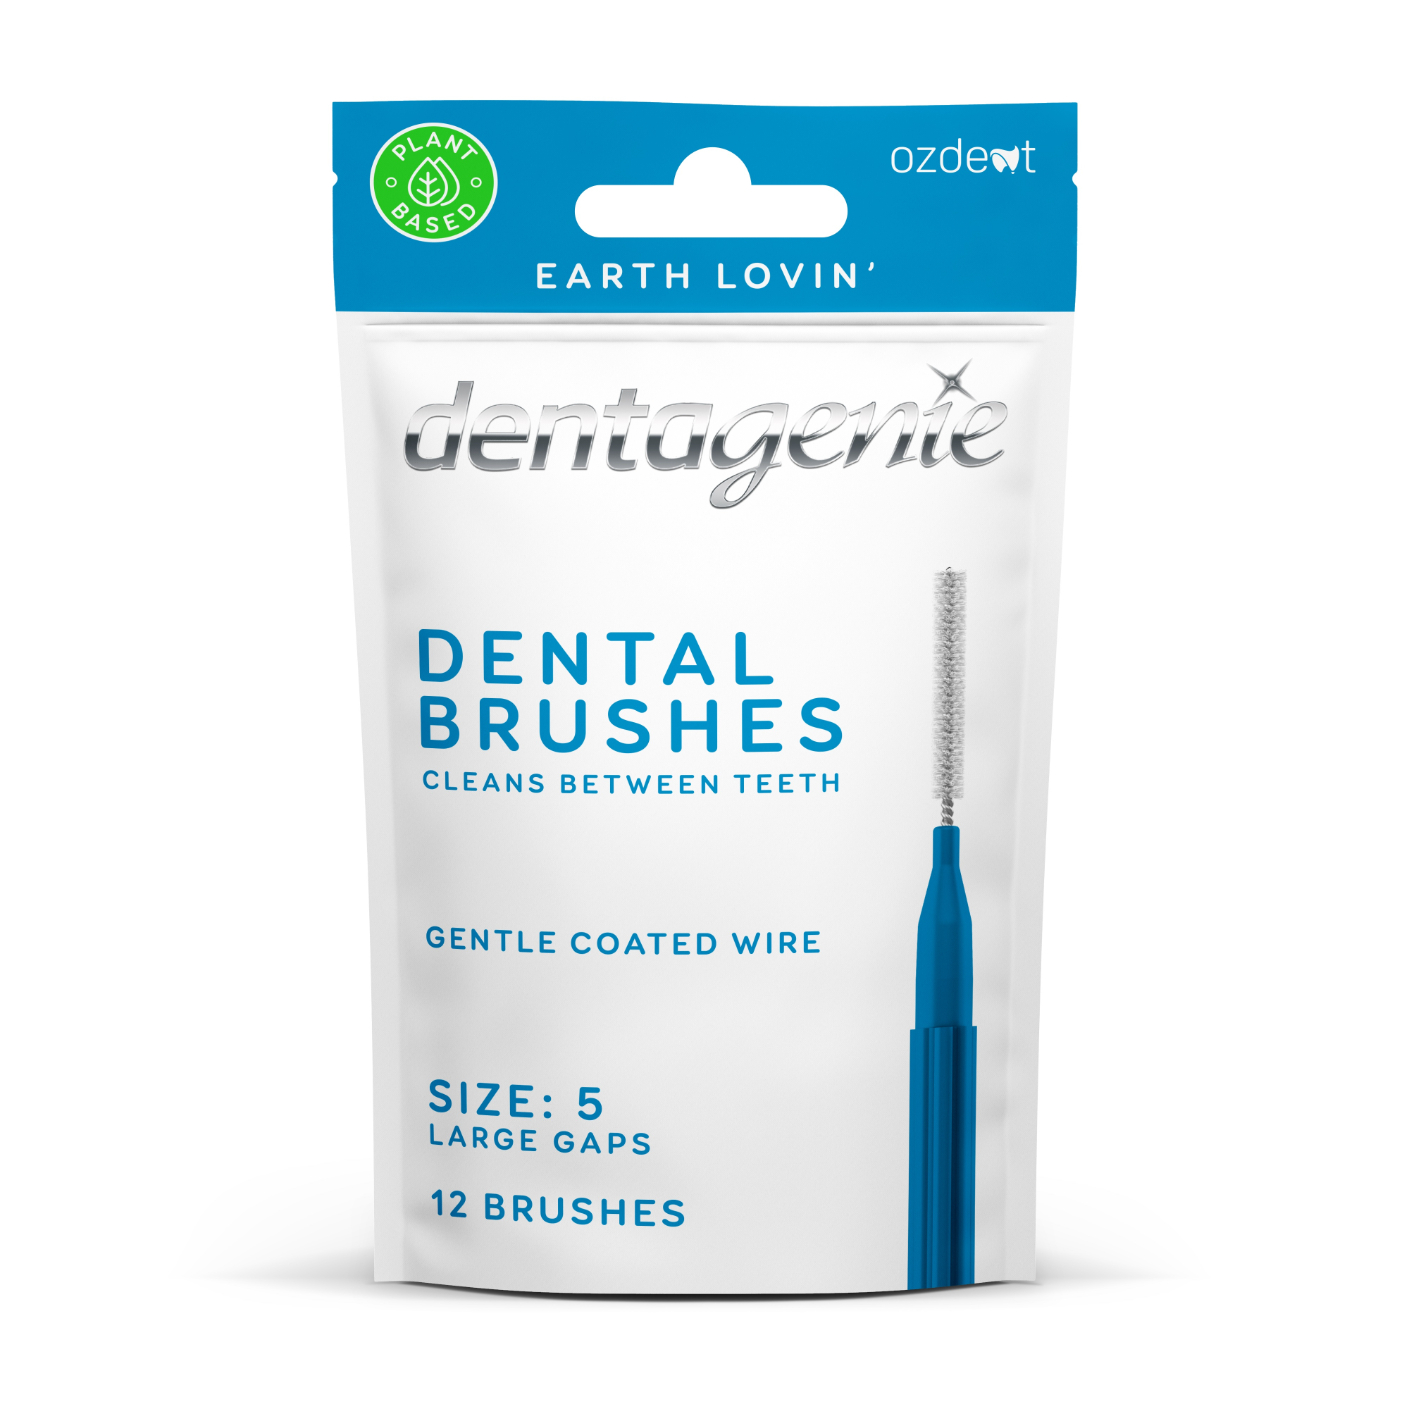 Dental Brushs for Large Gaps by Dentagenie